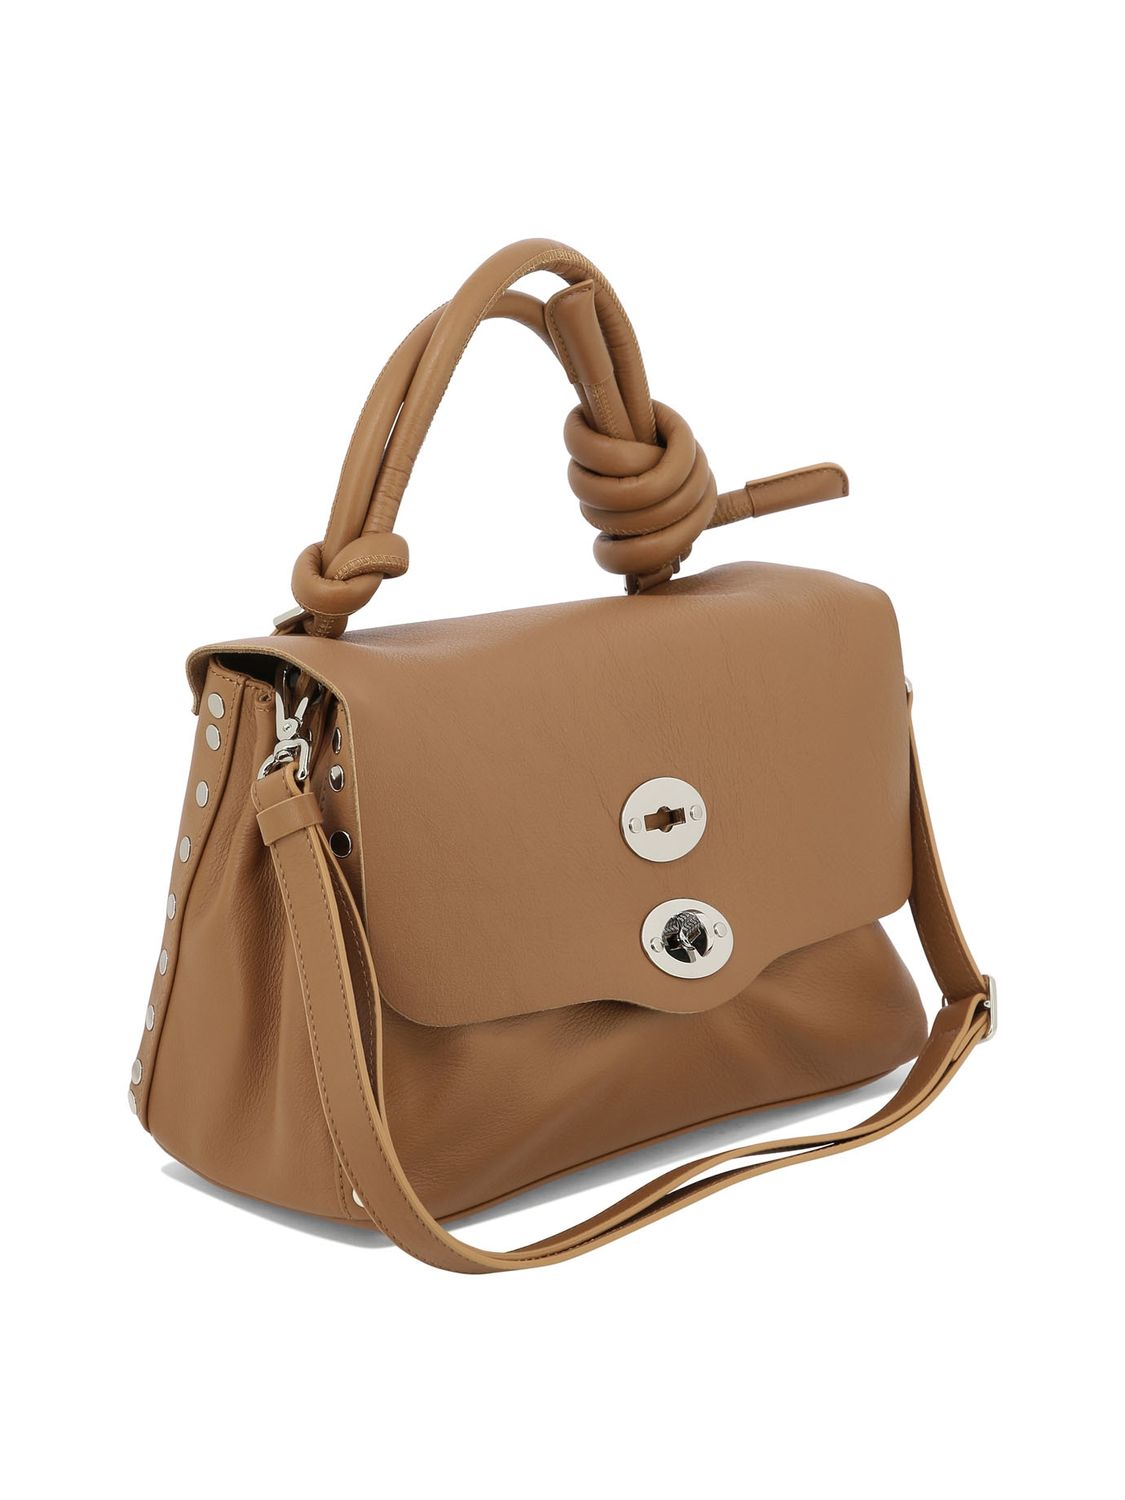 ZANELLATO Tan Leather Postman Knot Handbag for Women